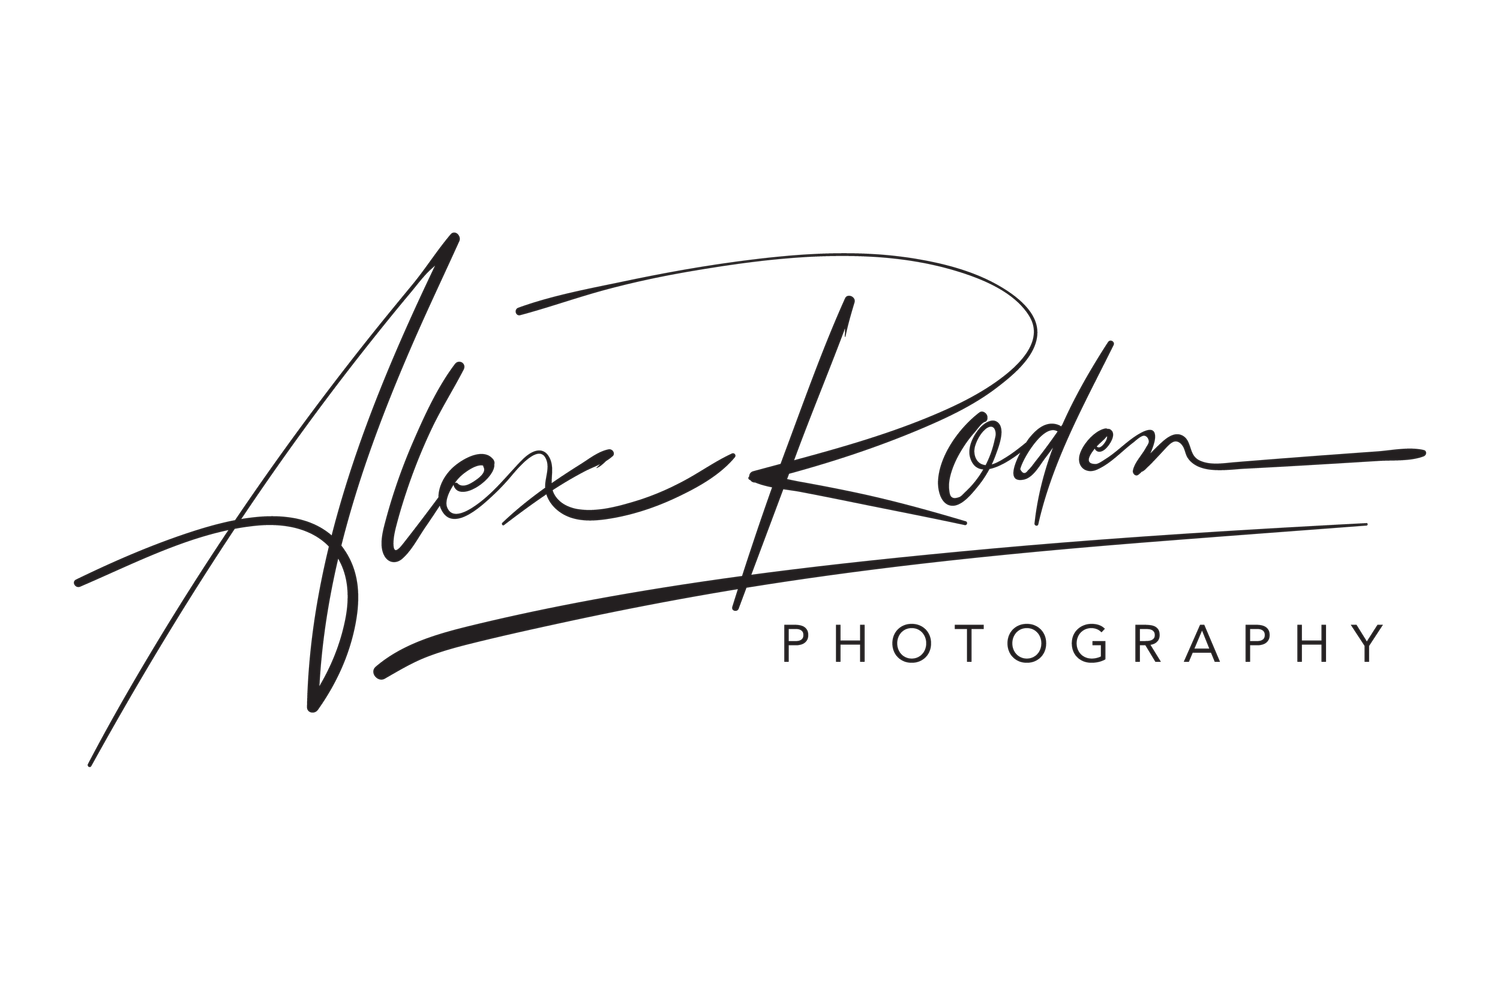 Alex Roden Photography